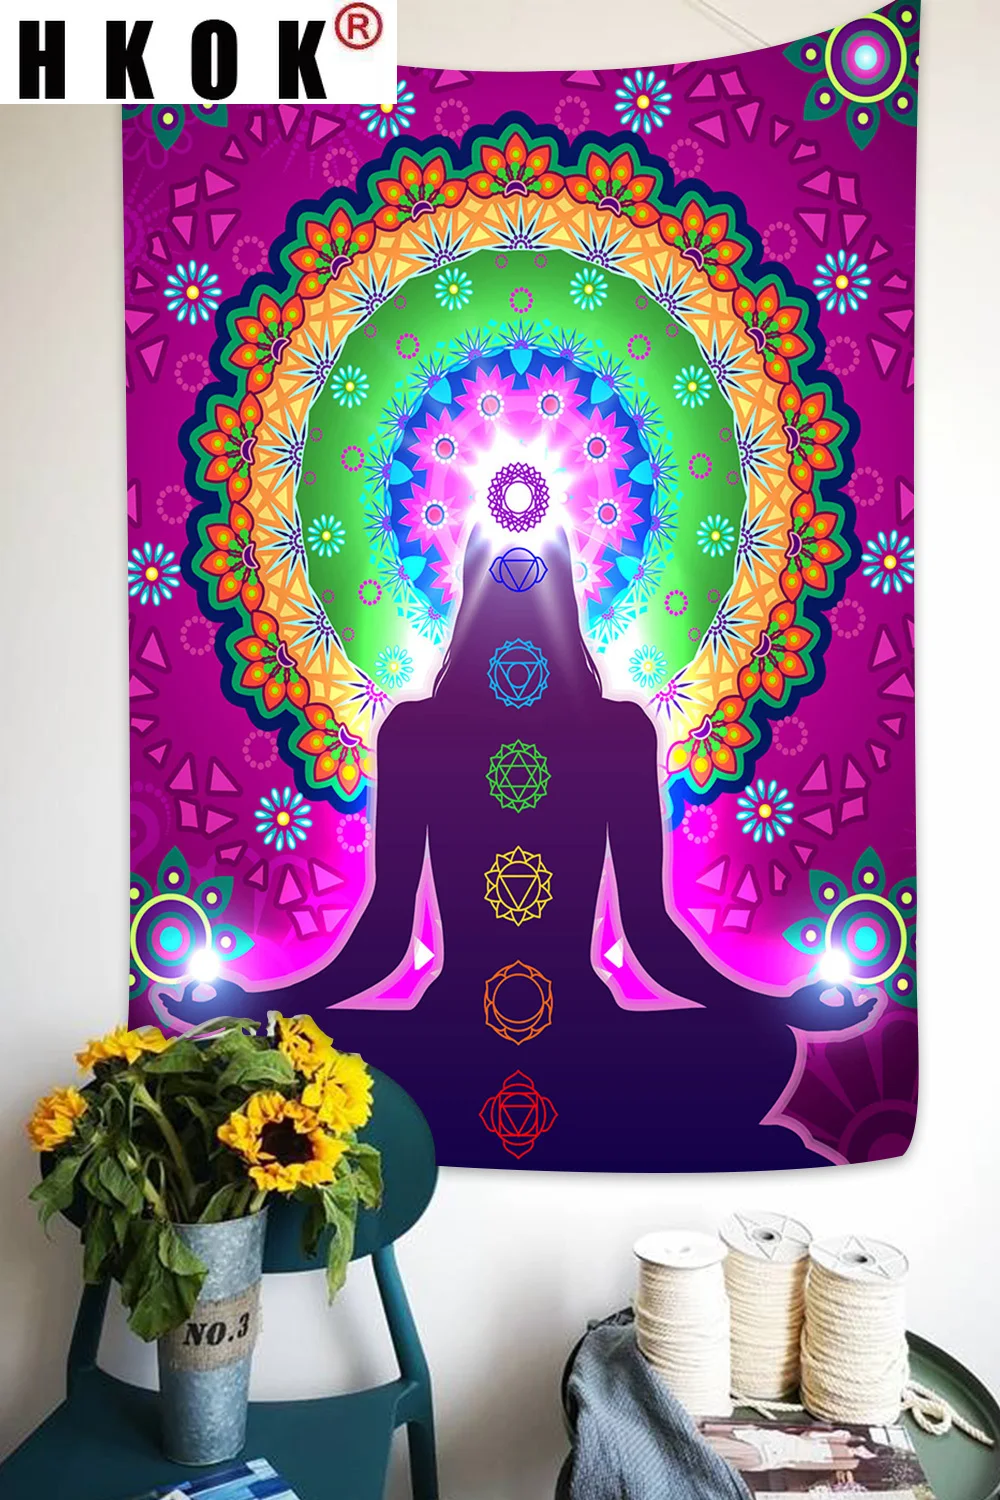 

HKOK Nazarite Yoga Meditation Tapestry Chakra Art Hippie Mandala Wall Hanging Tapestries for Living Room Bedroom Dorm Home Decor